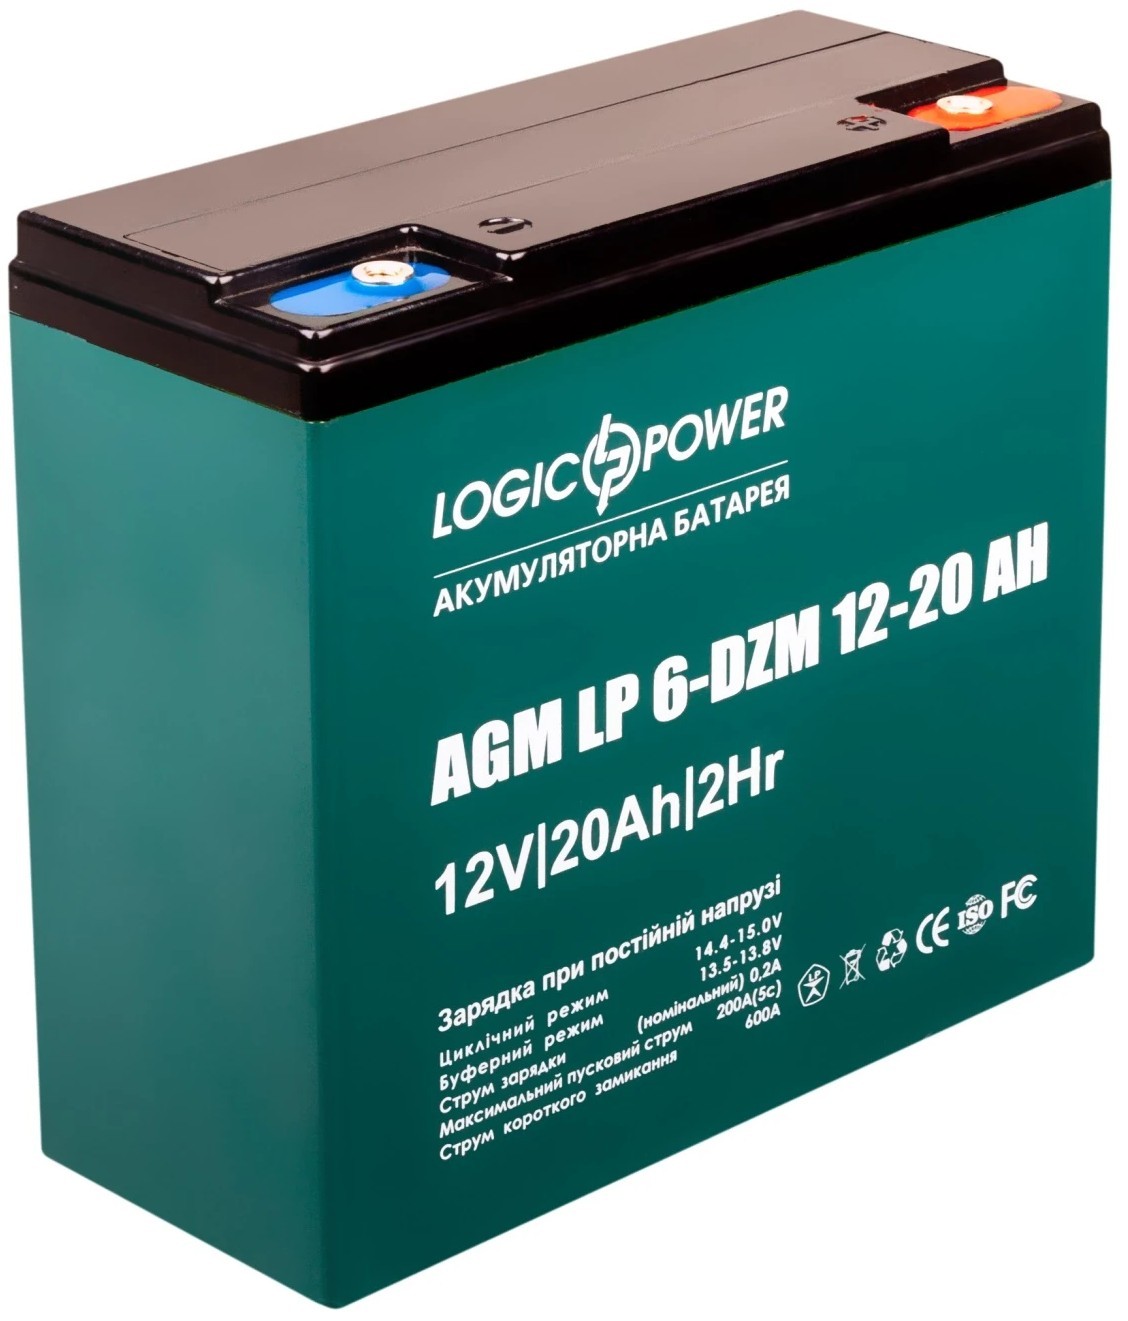 в продажу Акумулятор LogicPower LP 12V-20Ah (6-DZM-12-20) - фото 3